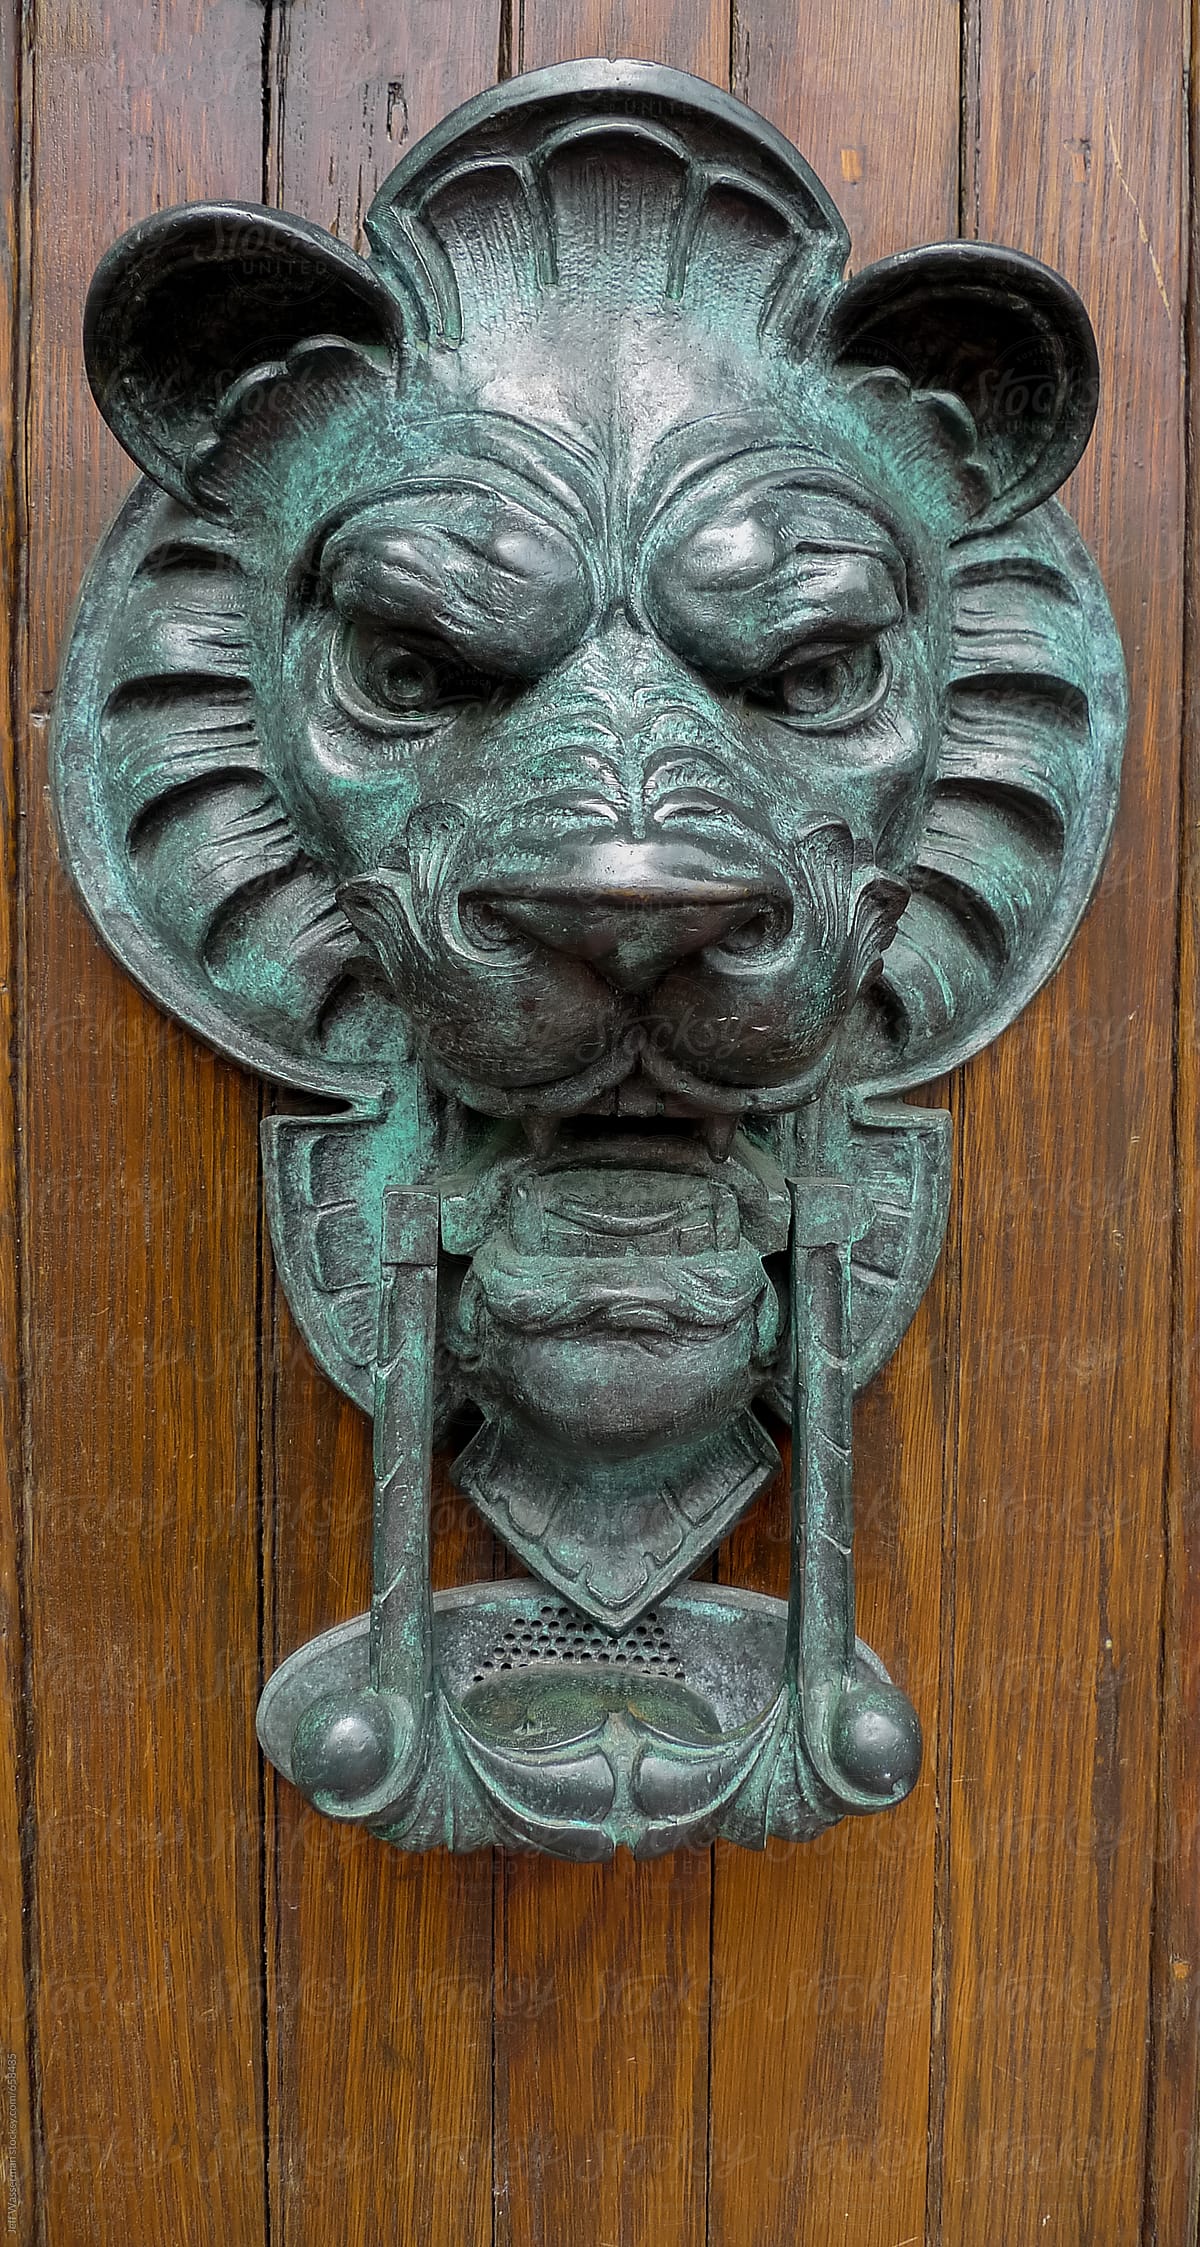 Antique Door Handle with Lion Face